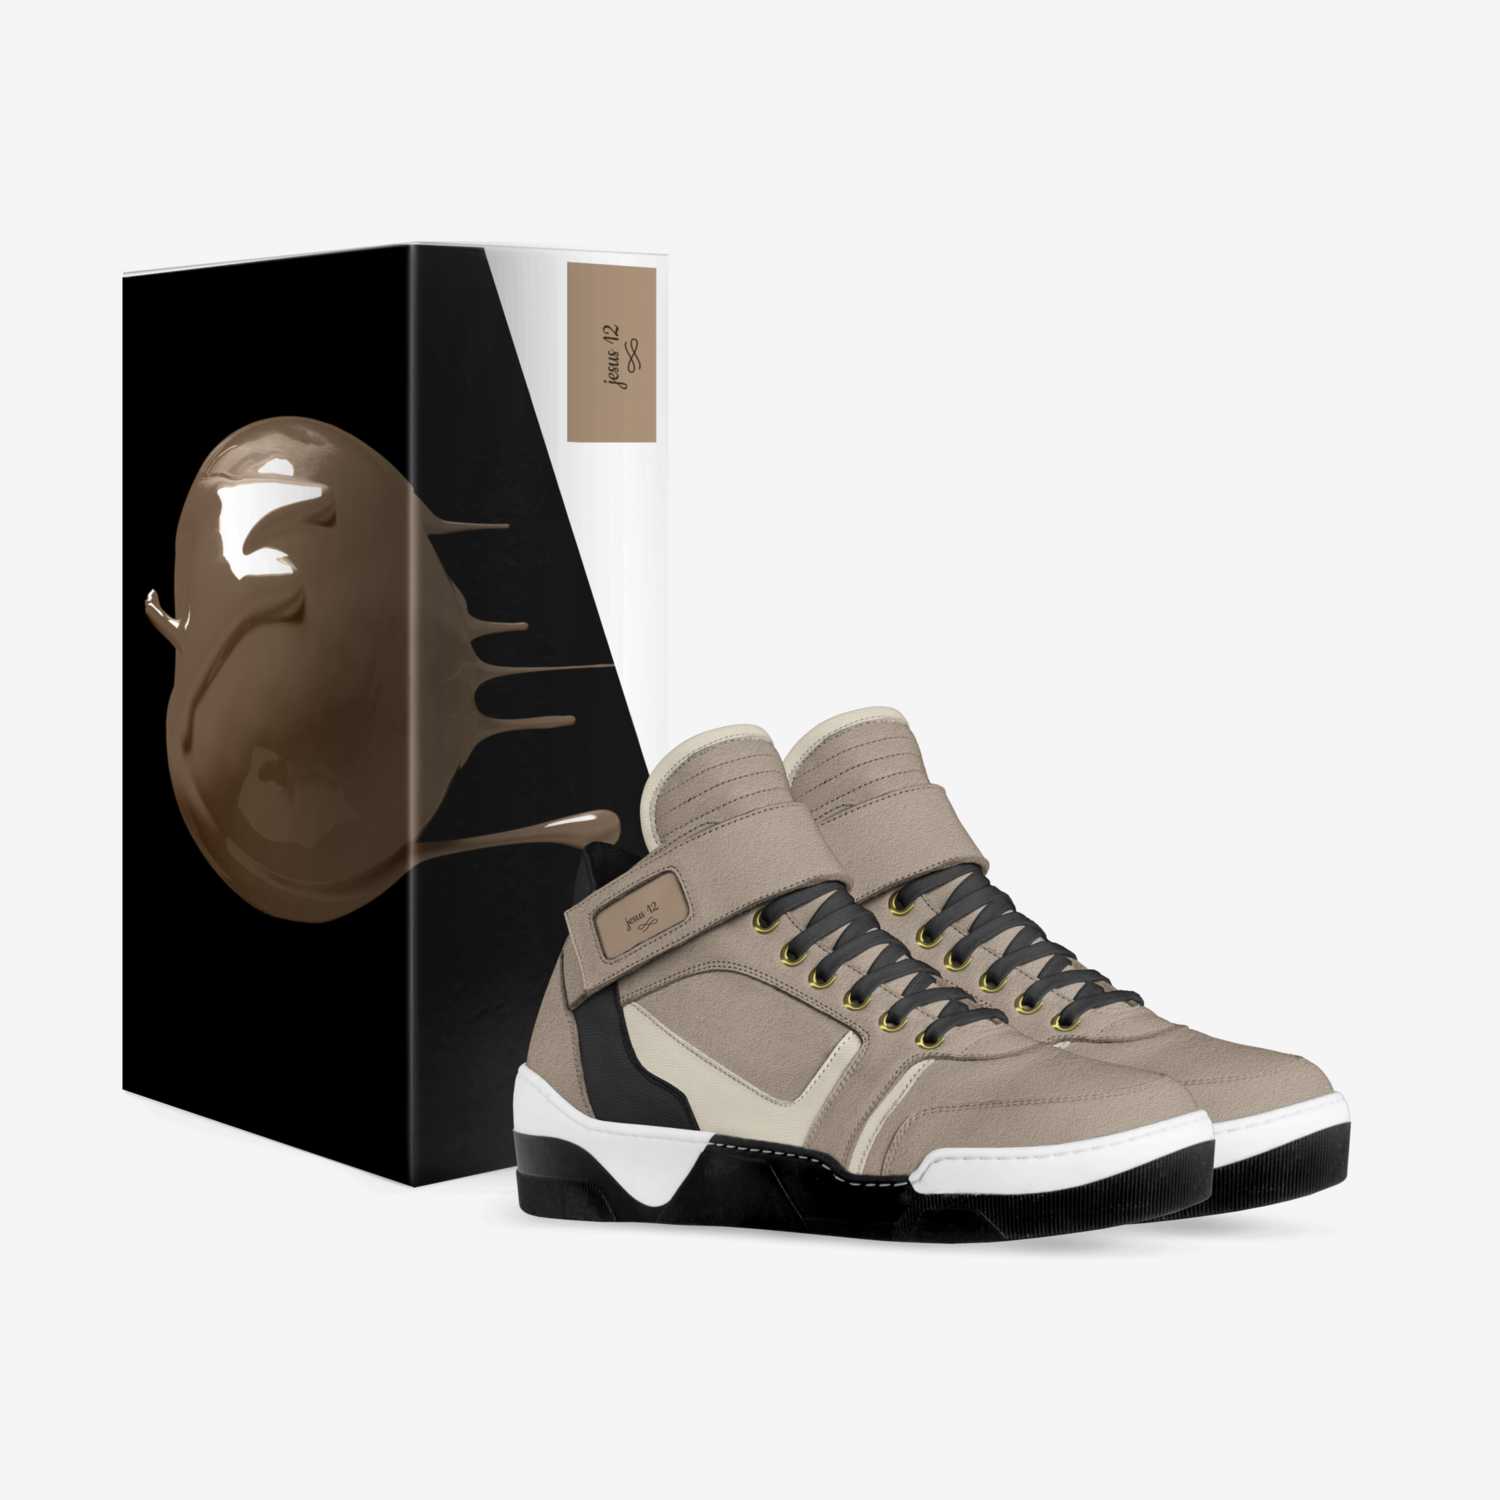 jxj custom made in Italy shoes by Skyler Kessler | Box view